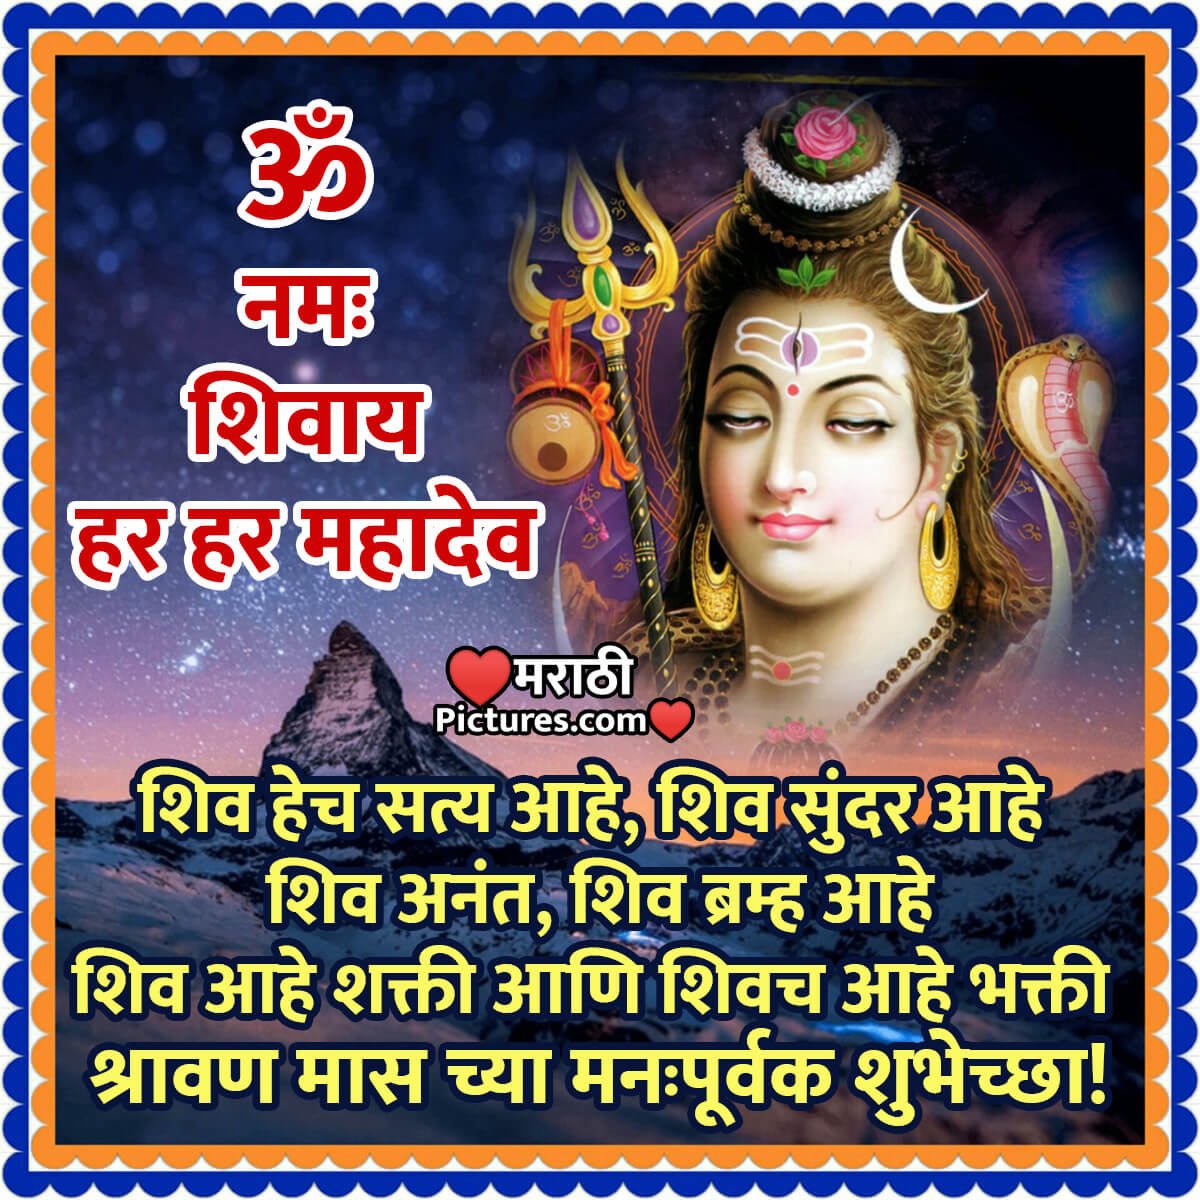 Shravan Mas Marathi Wishes